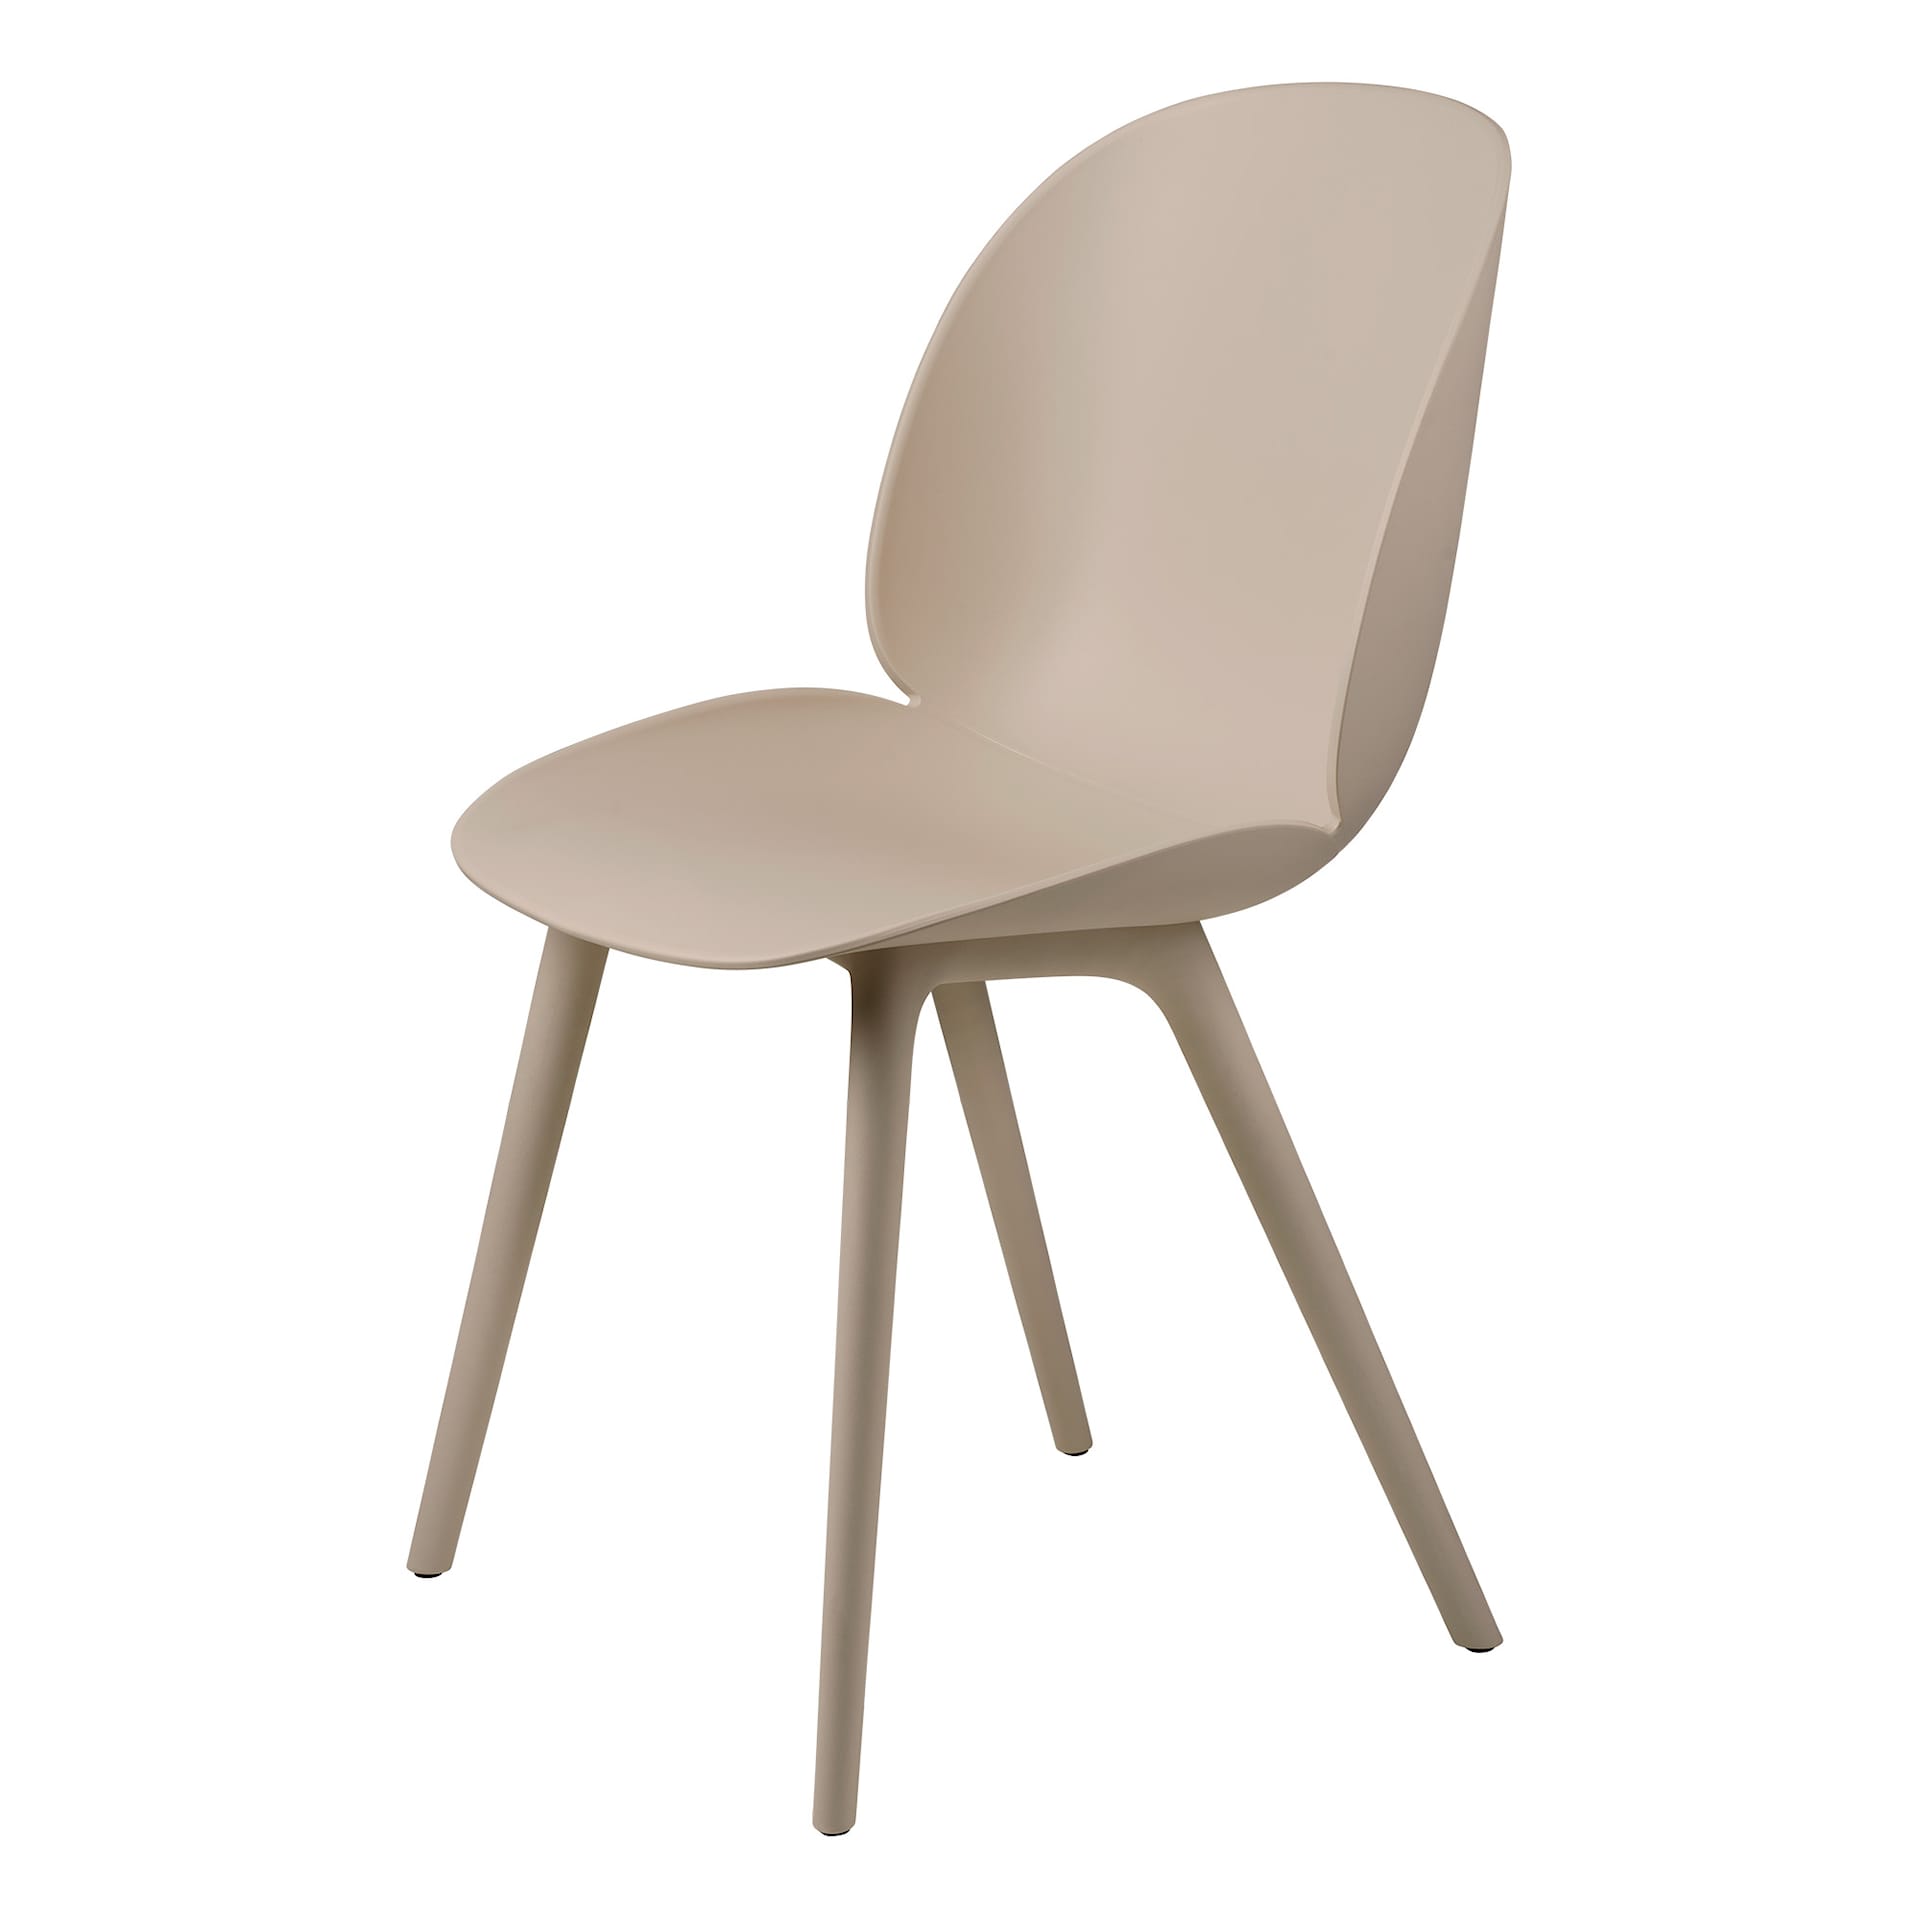 Beetle Dining Chair Plastic Edition - Gubi - GamFratesi - NO GA